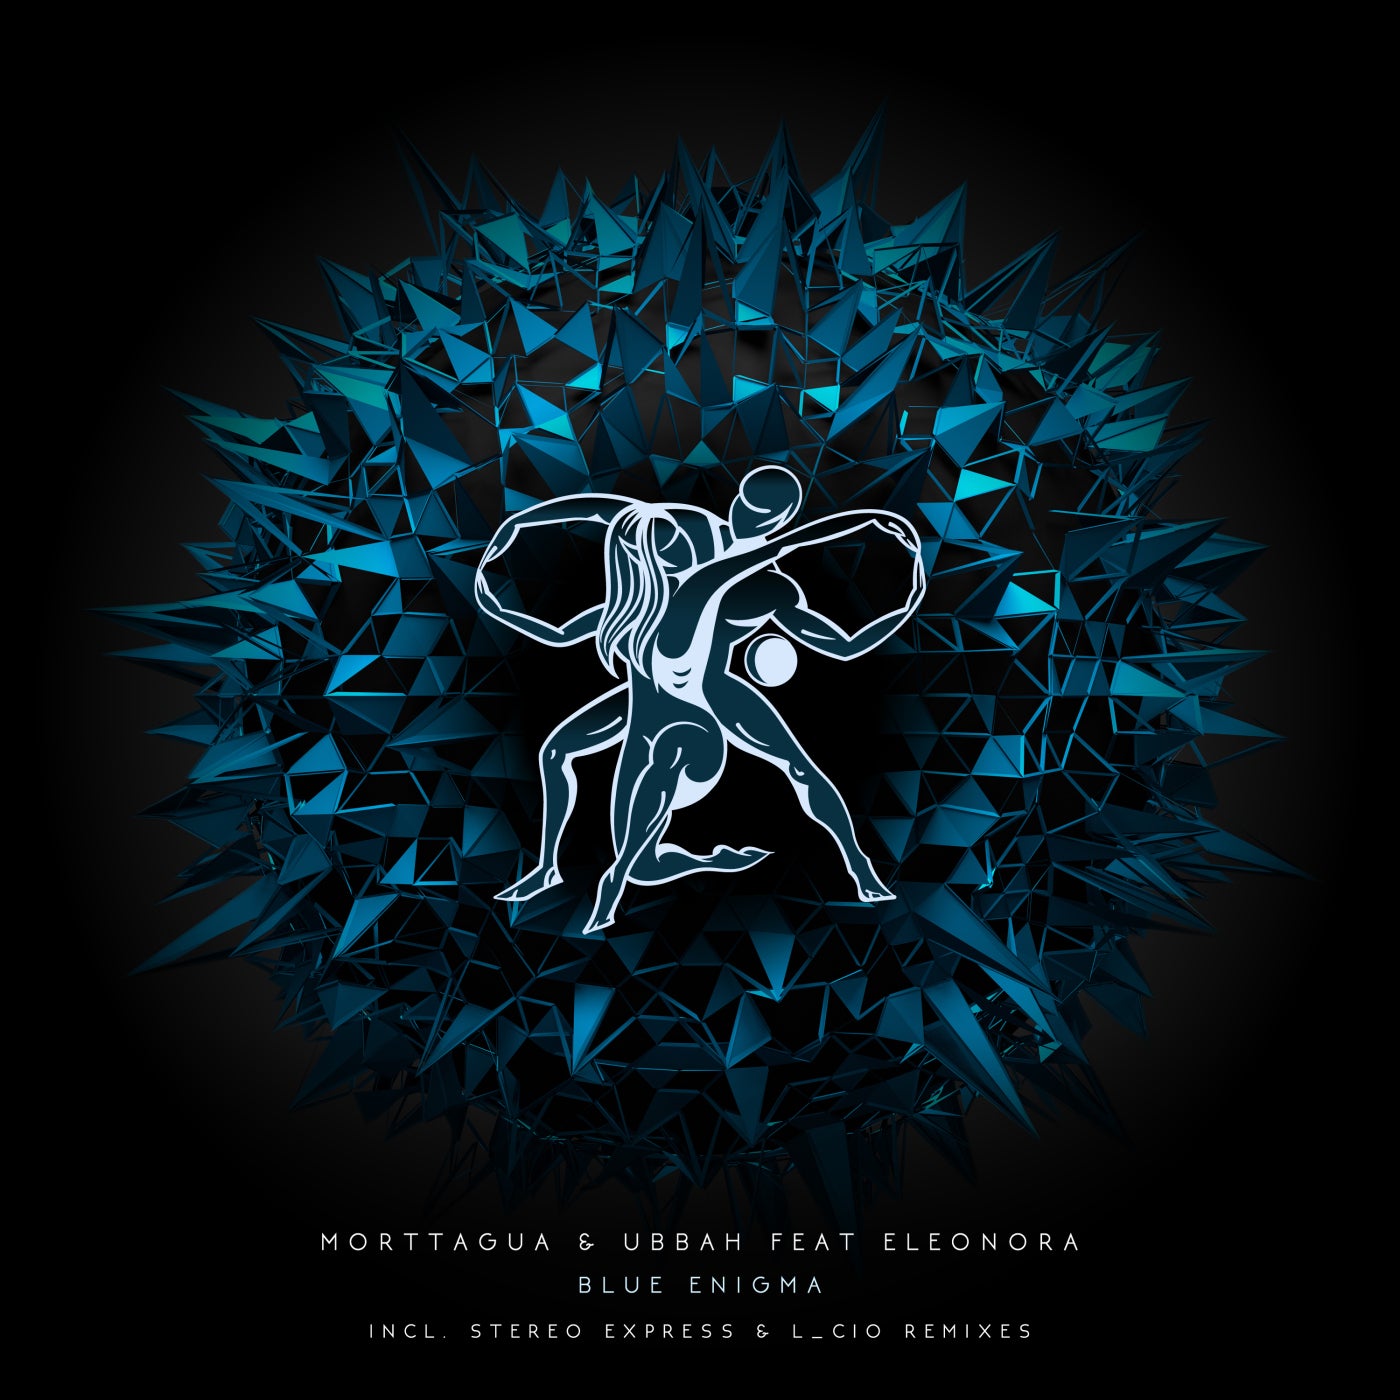 Morttagua & Ubbah feat. Eleonora - Blue Enigma (Stereo Express Remix)